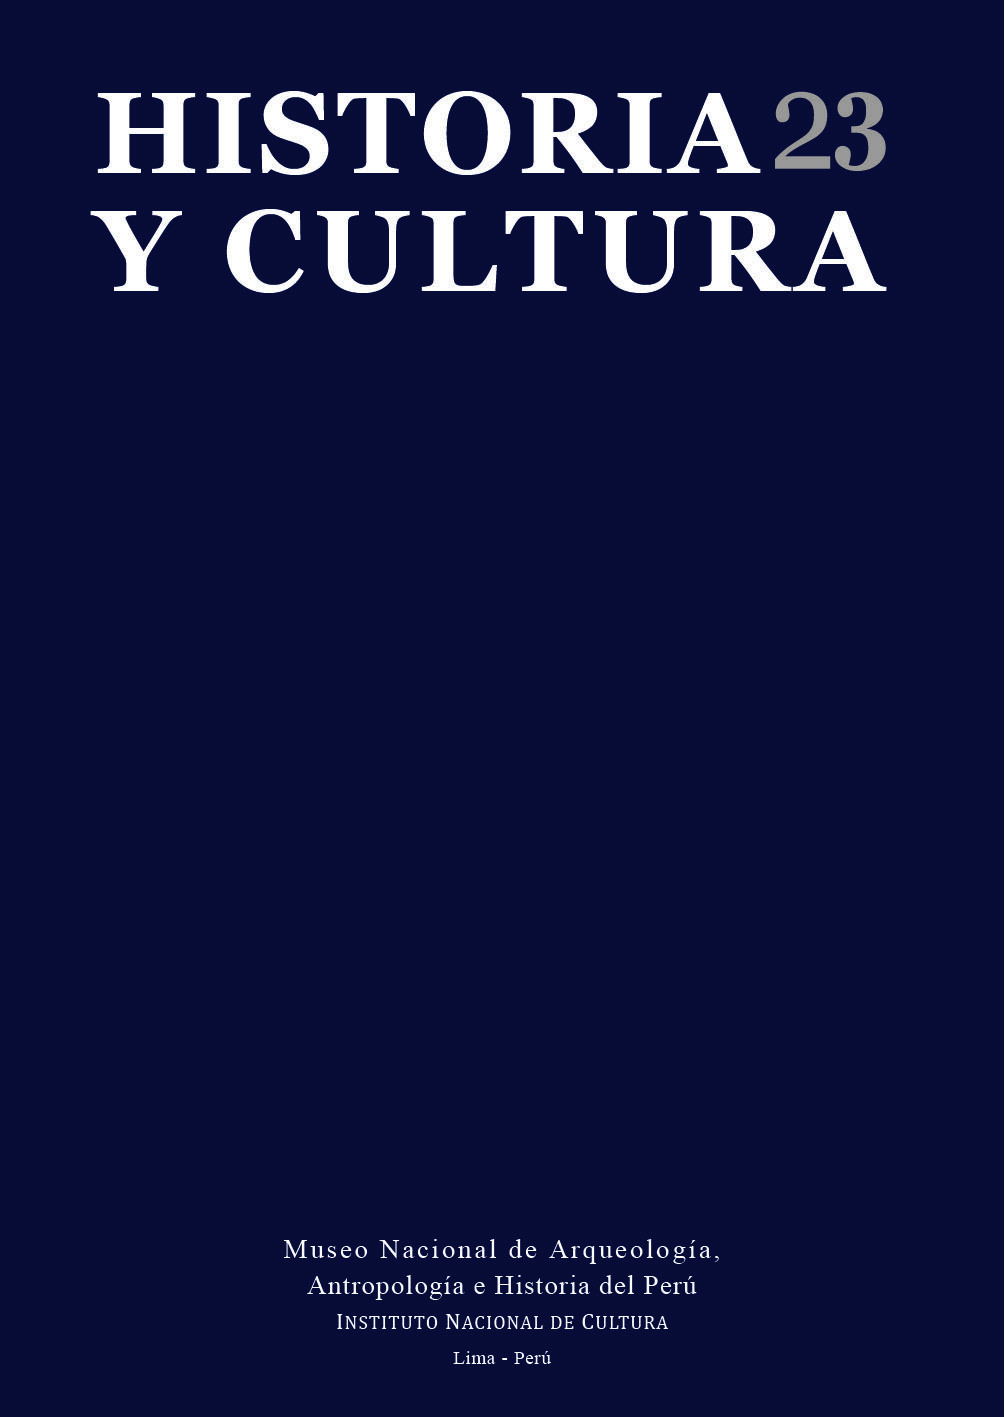 					Ver Núm. 23 (1999): Historia y Cultura 23
				